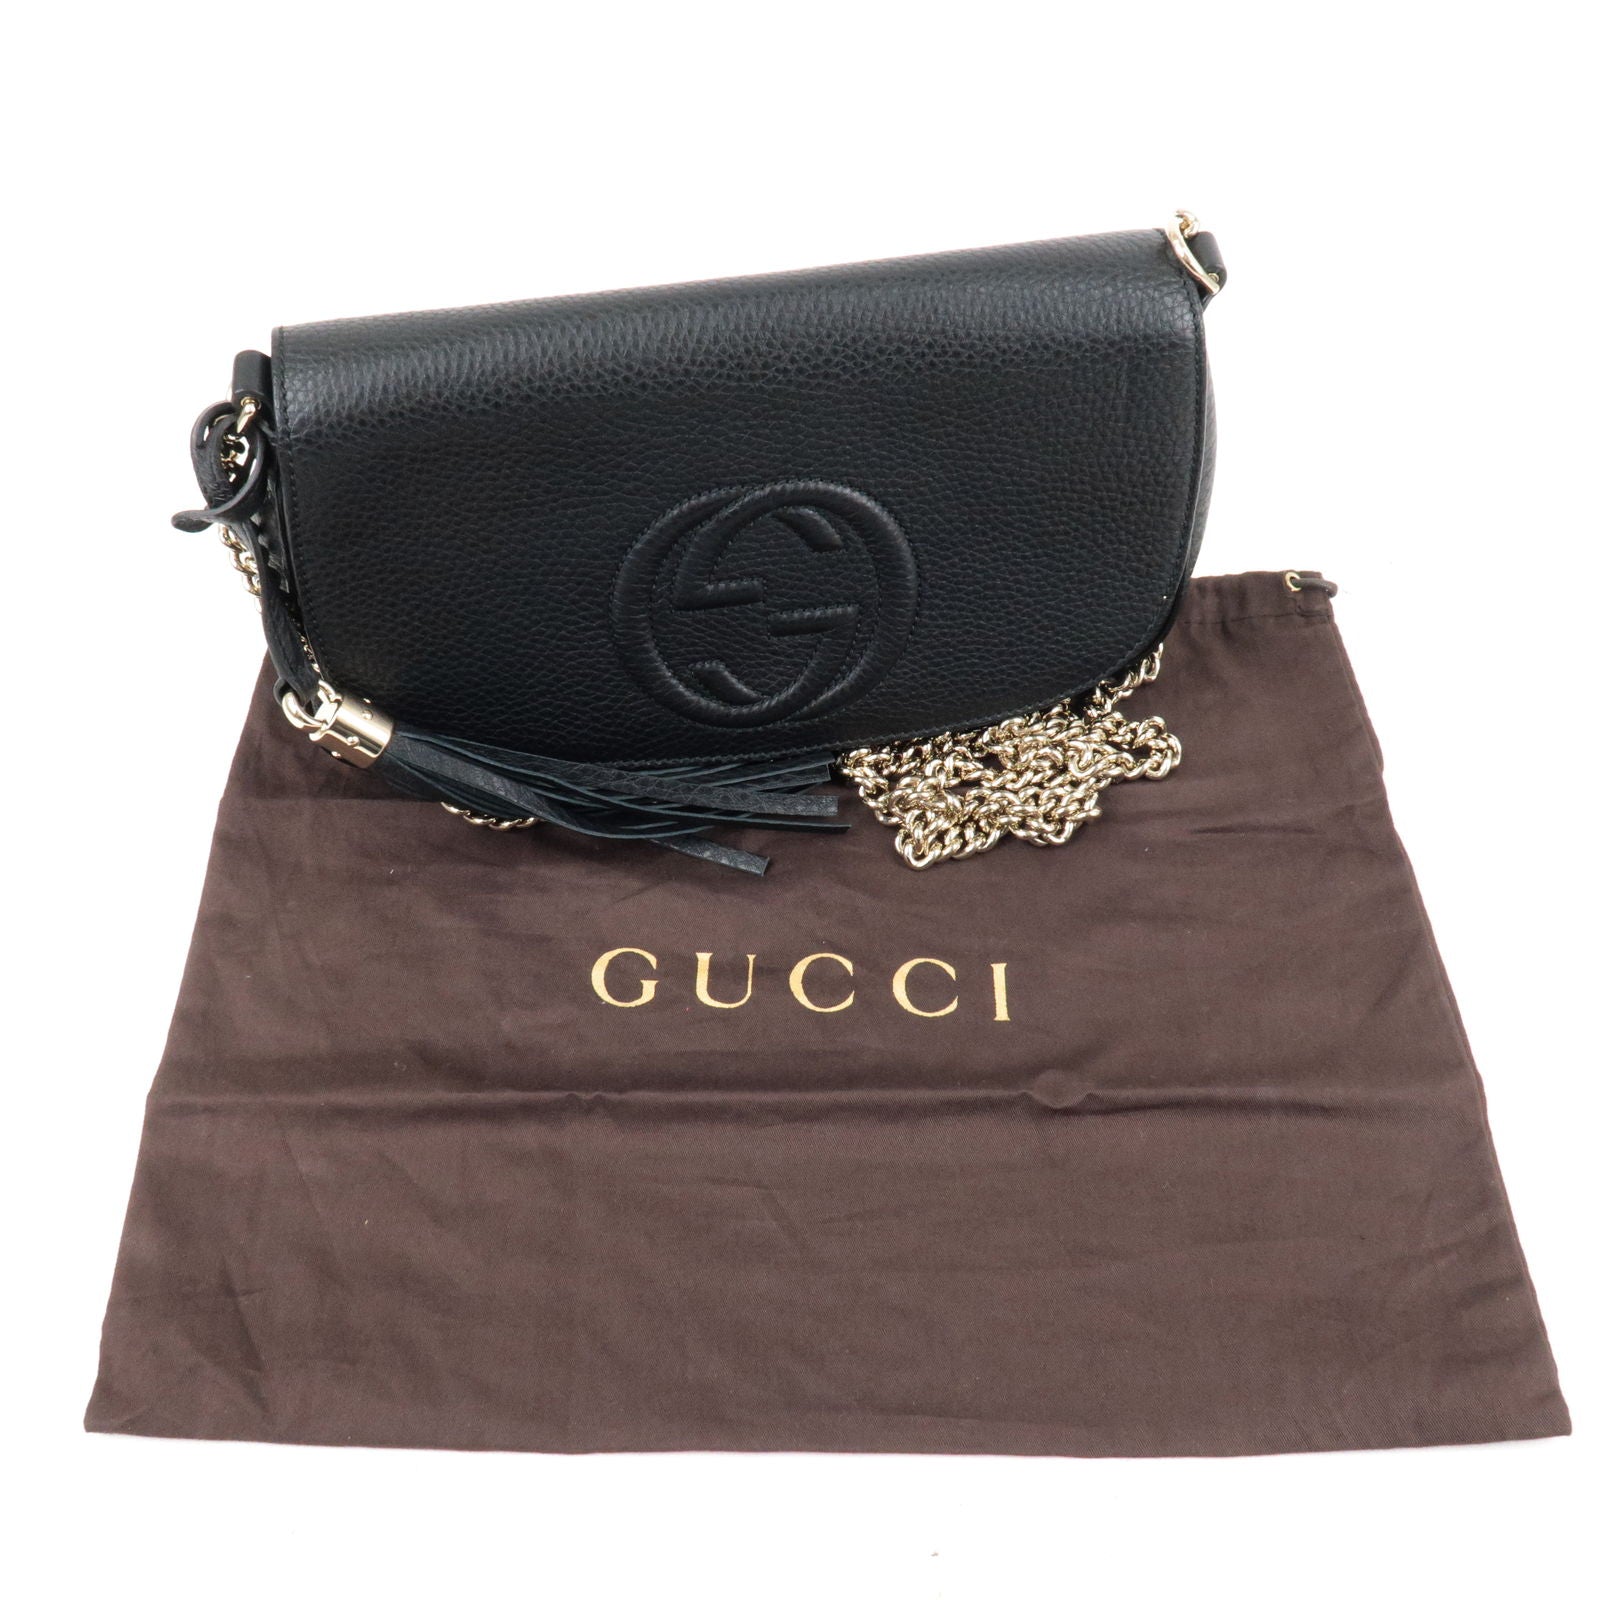 Gucci Girls' Accessories for sale | eBay